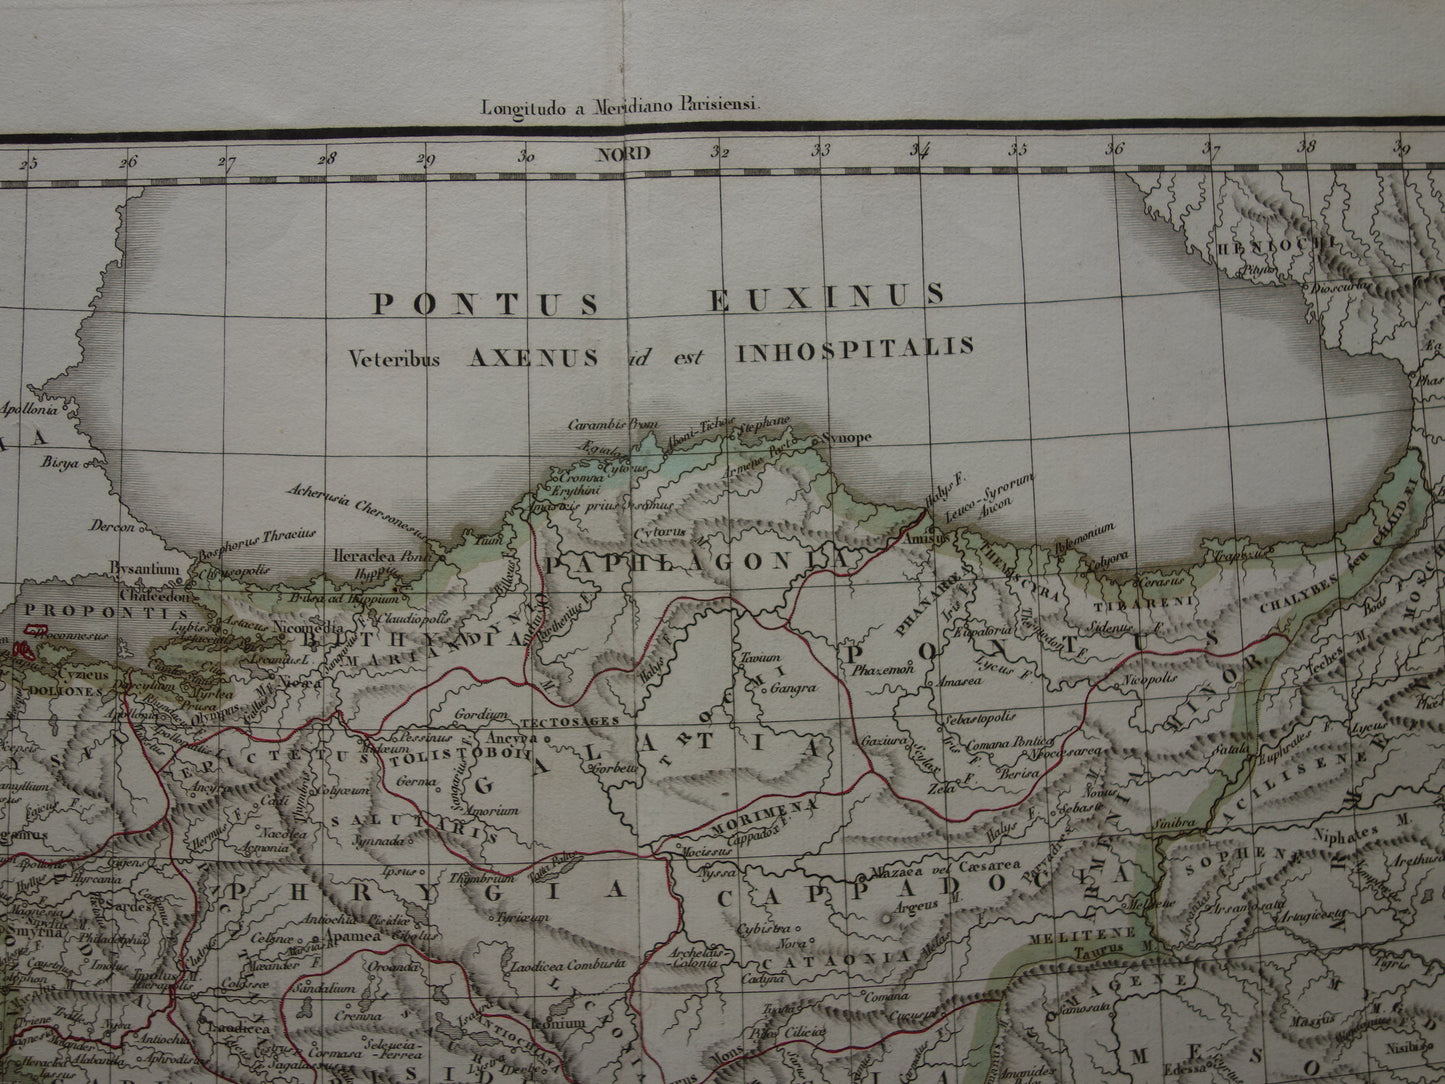 Asia Minor oude kaart van Klein-Azië in de klassieke oudheid uit 1832 - originele antieke handgekleurde landkaart Turkije